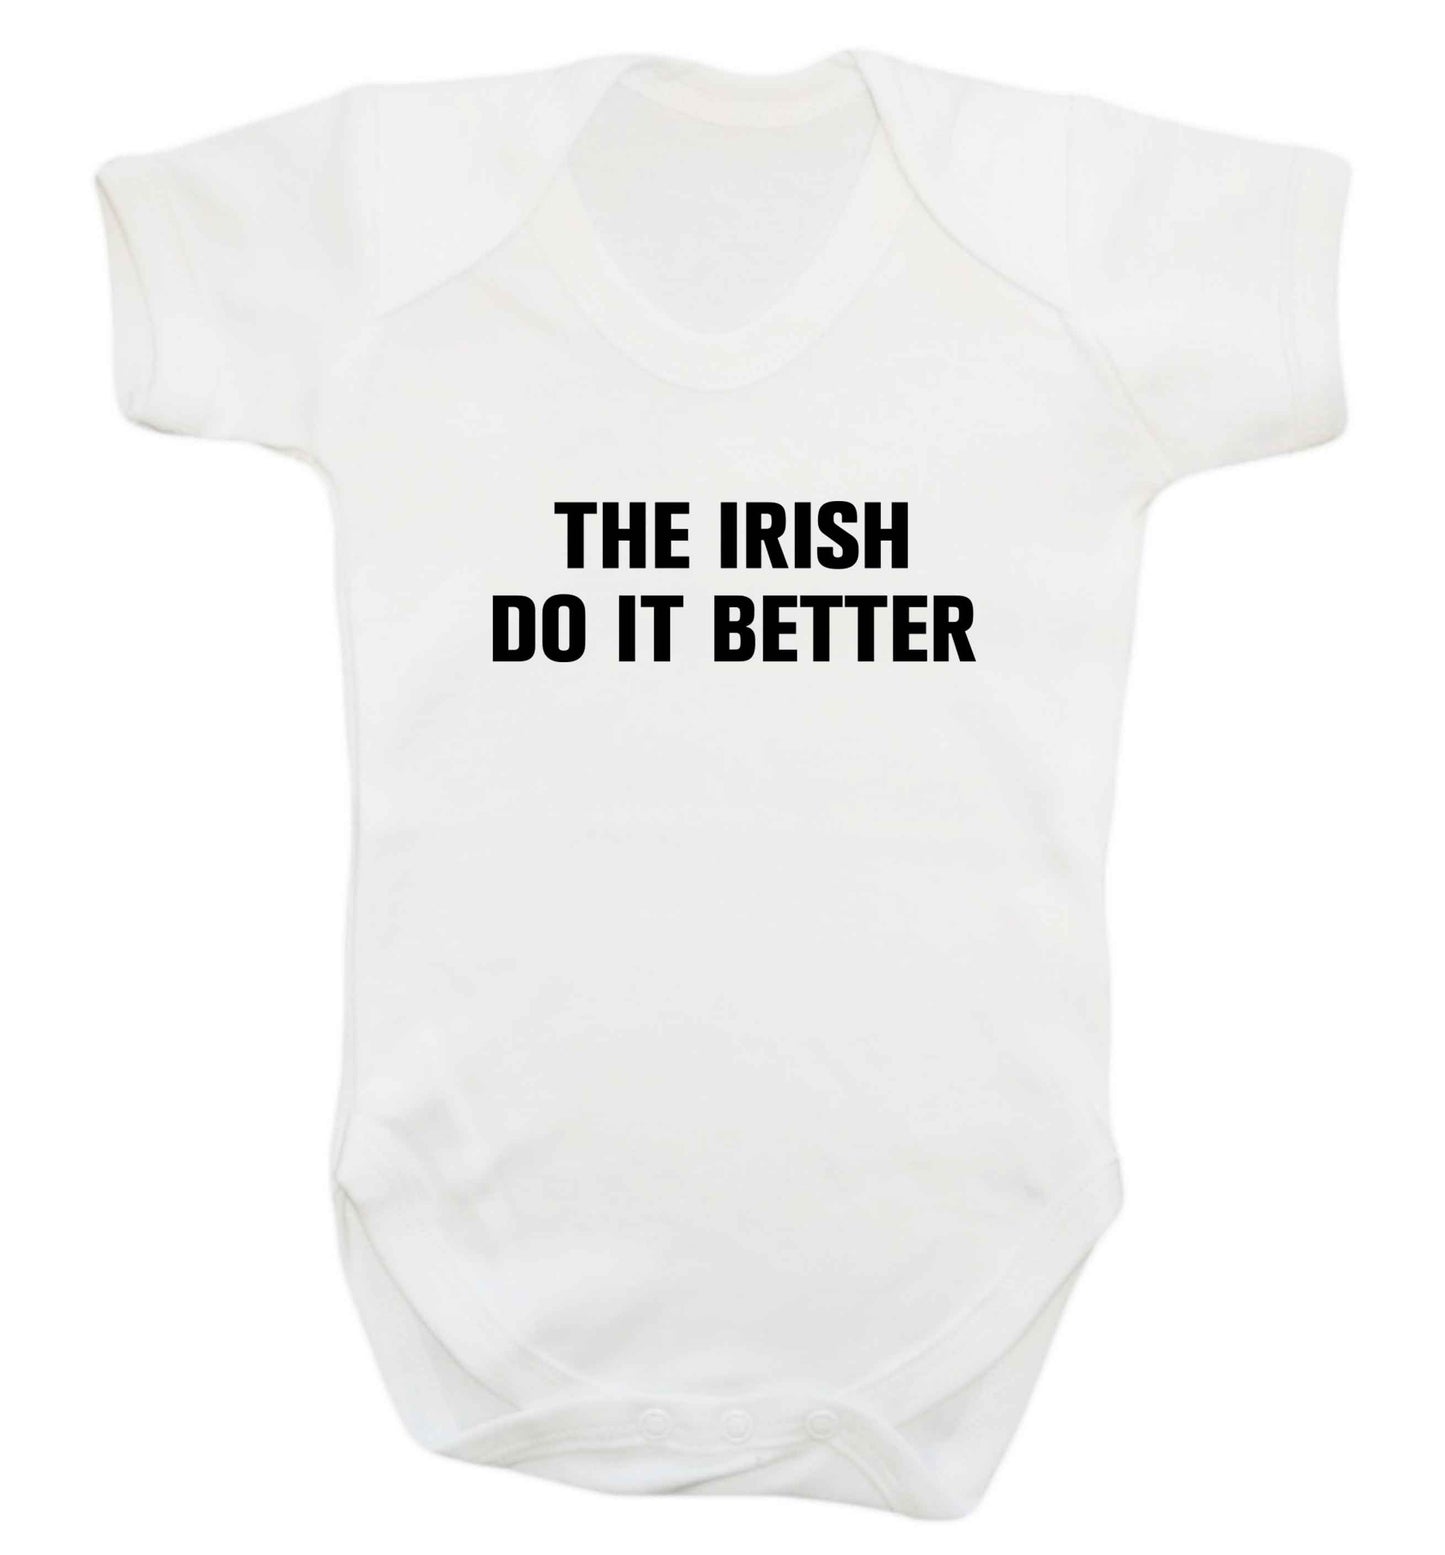 The Irish do it better baby vest white 18-24 months